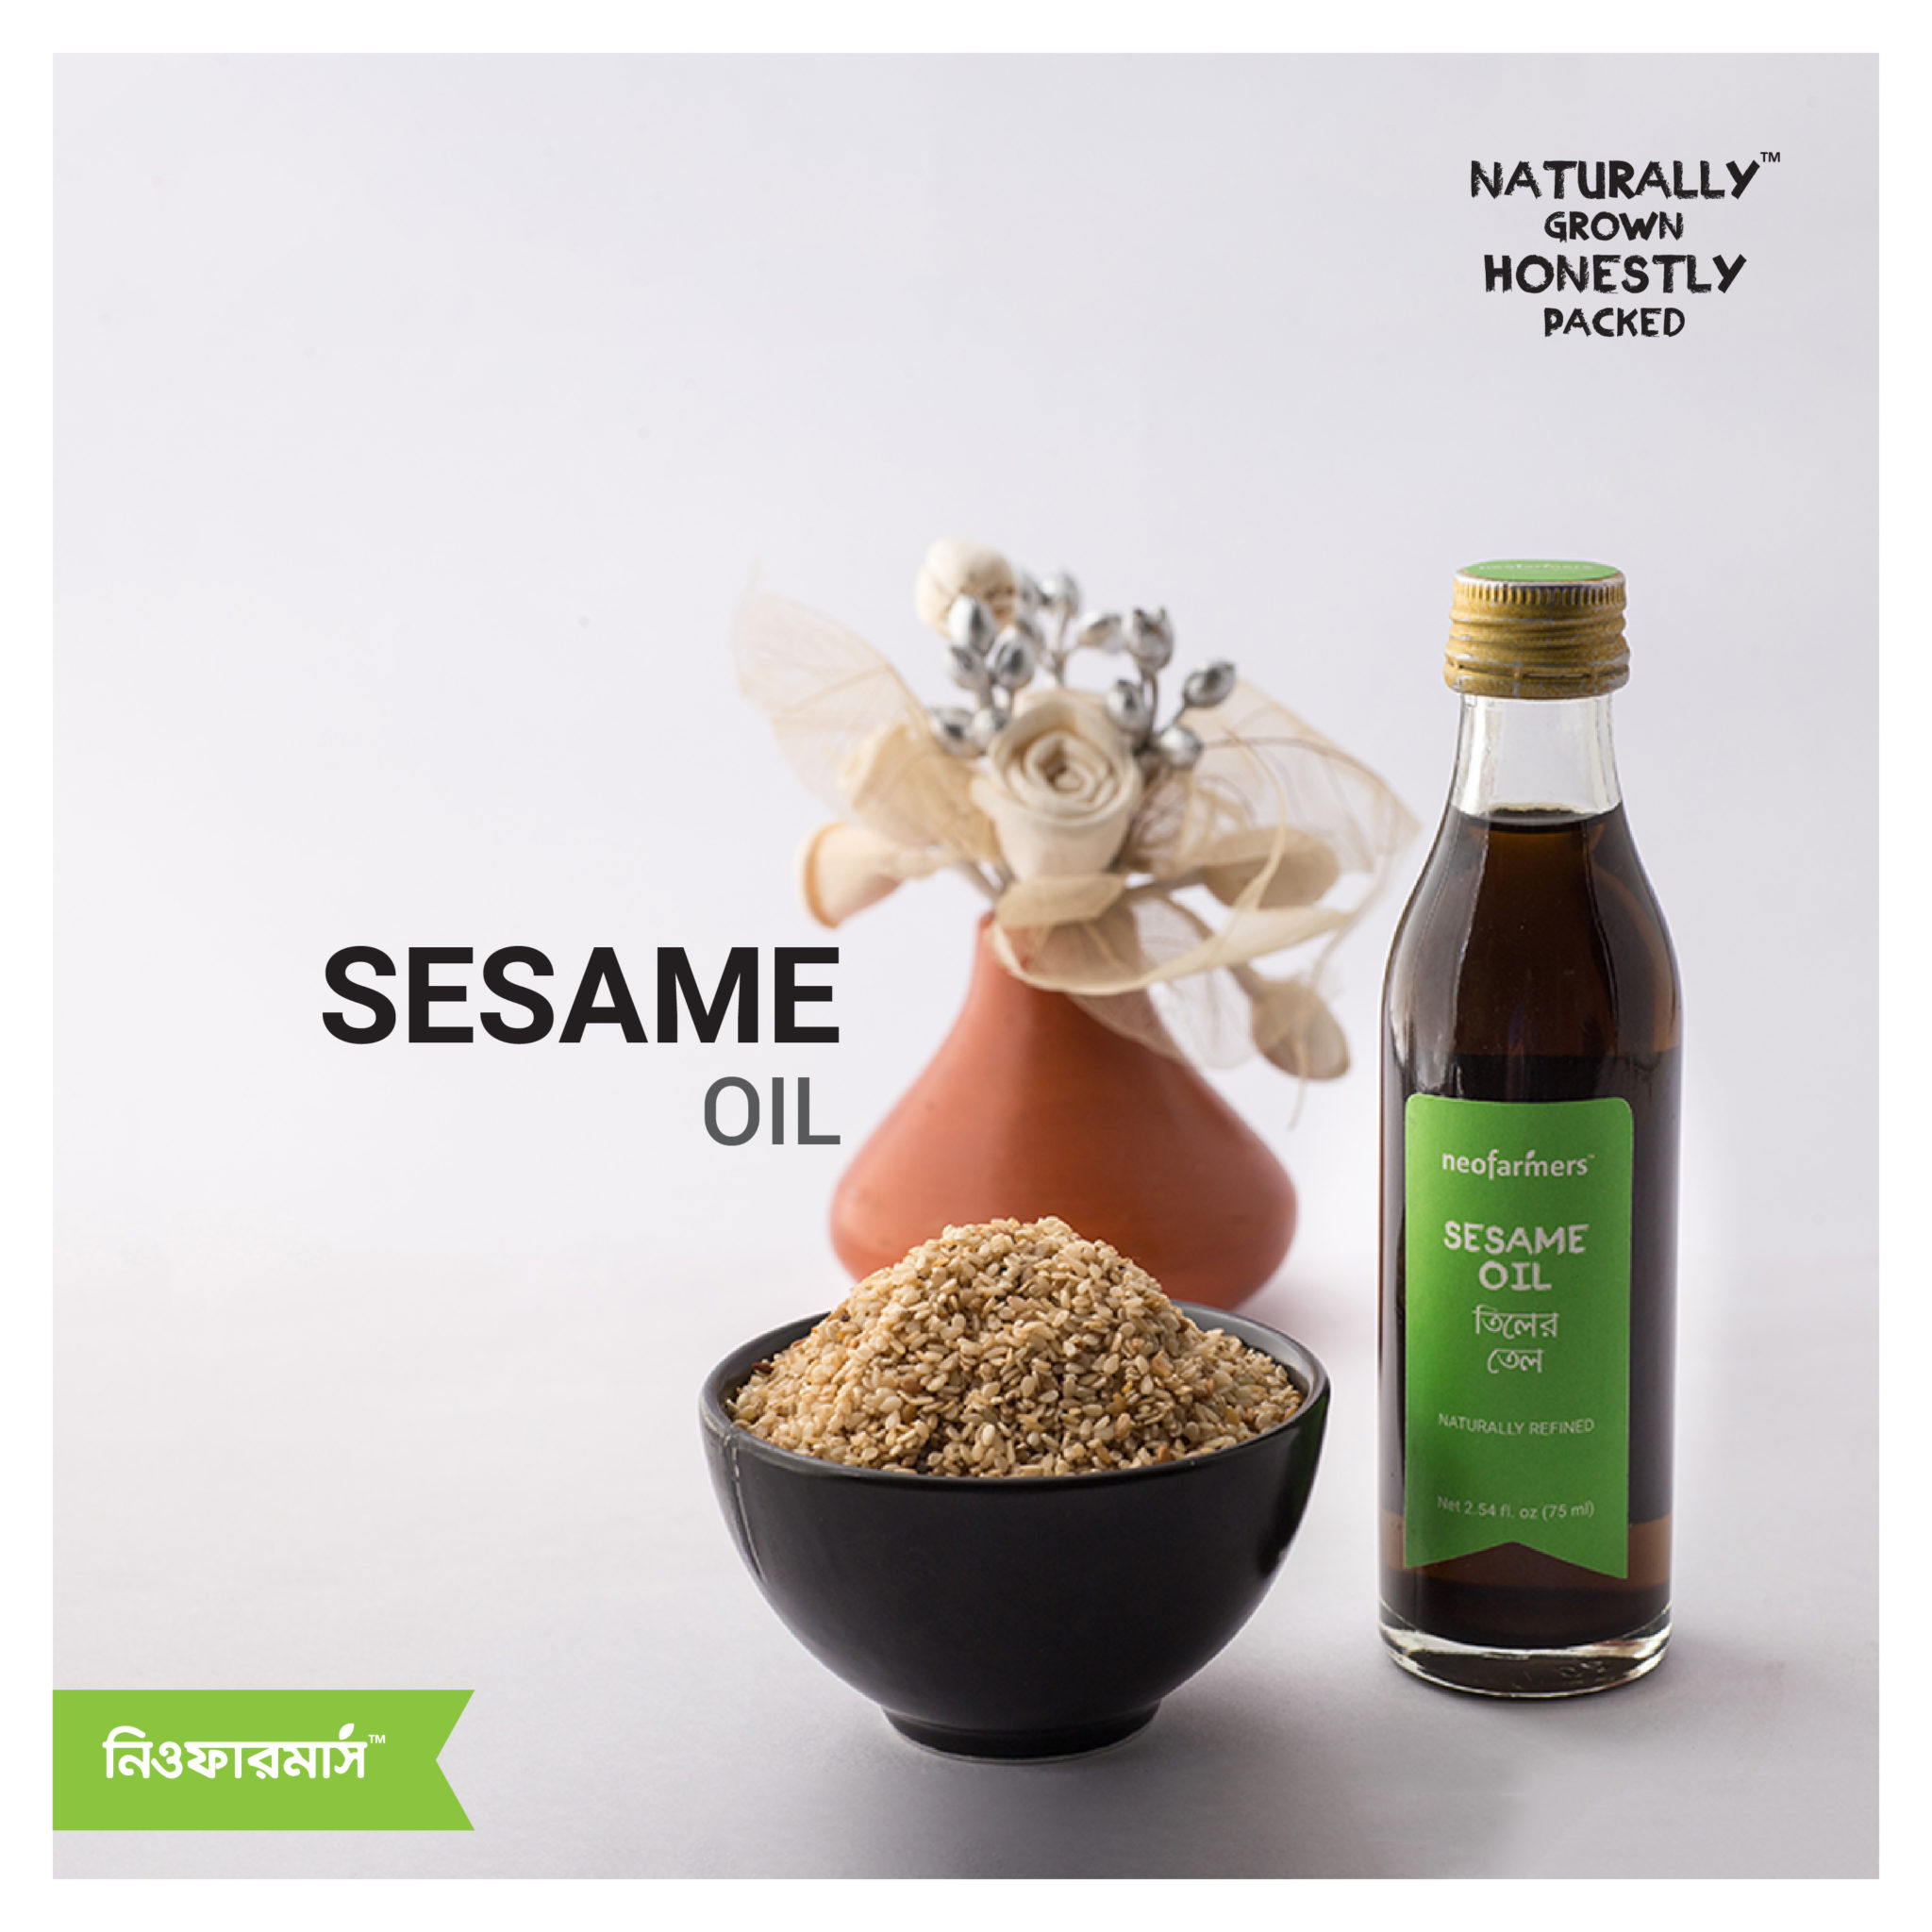 Sesame oil : A natural Nutrition